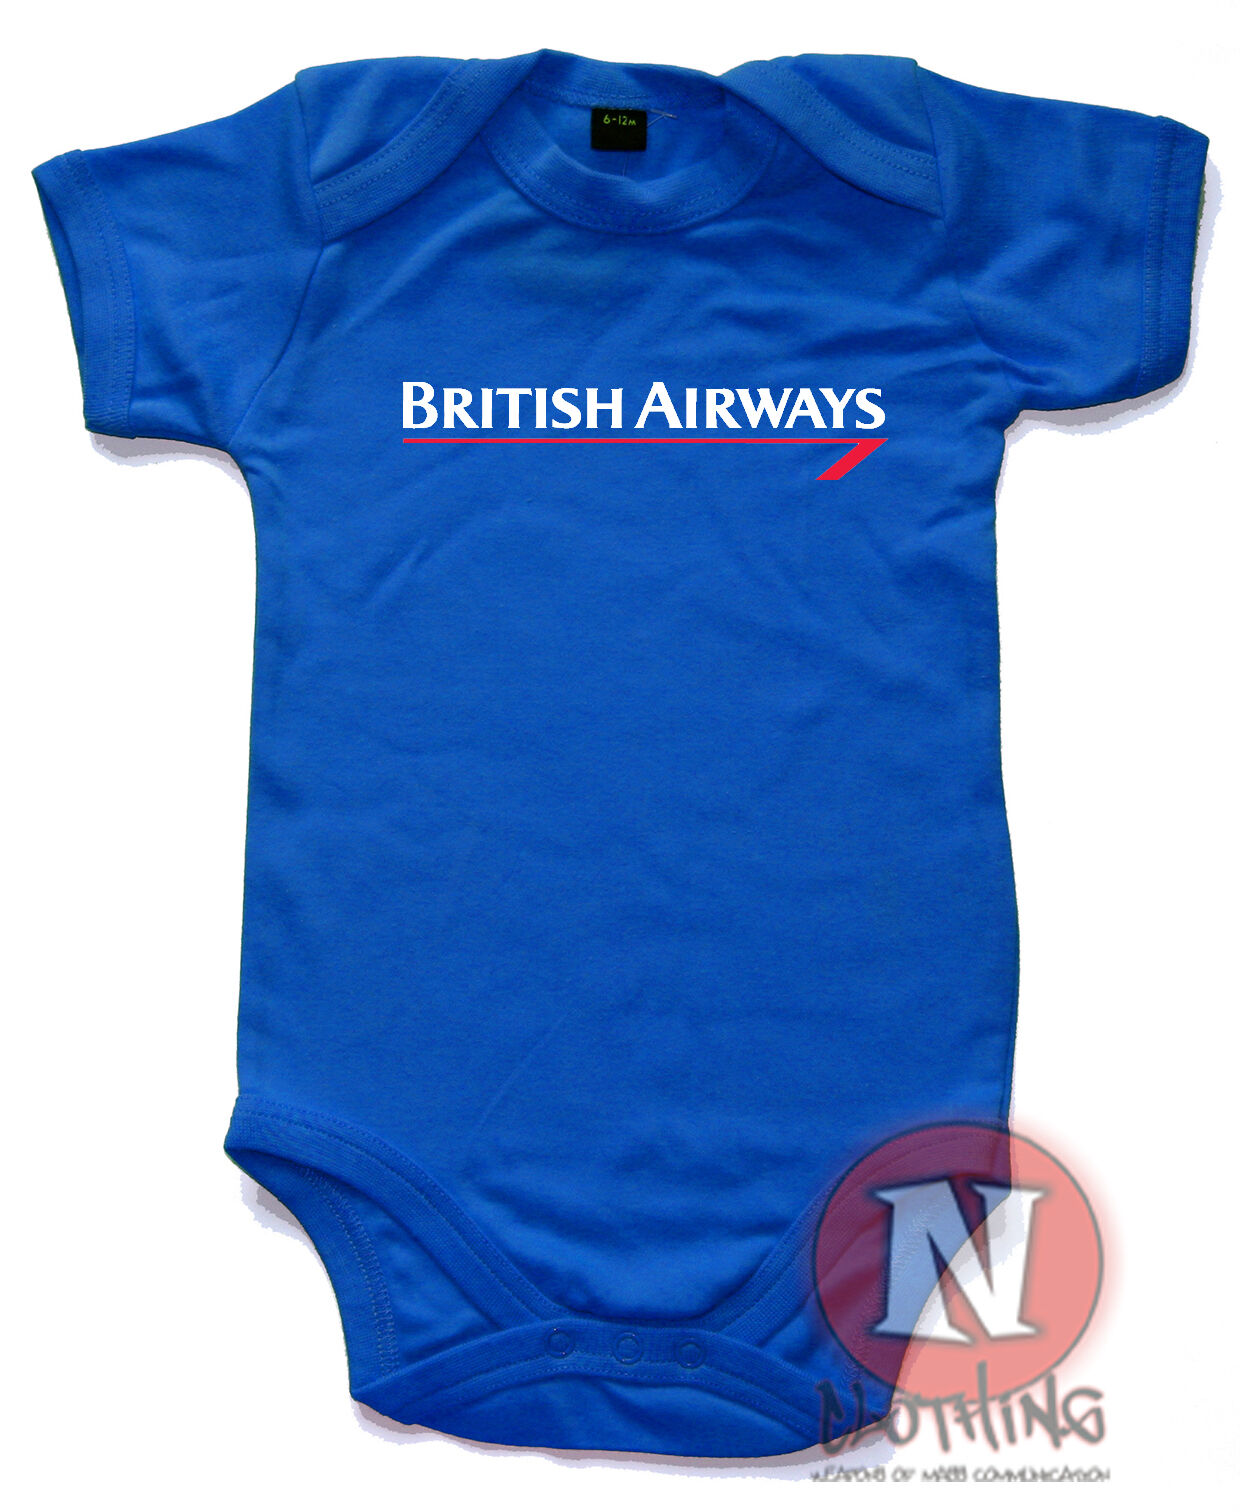 British Airways Babygrow Baby Suit Great Gift cute vest airline